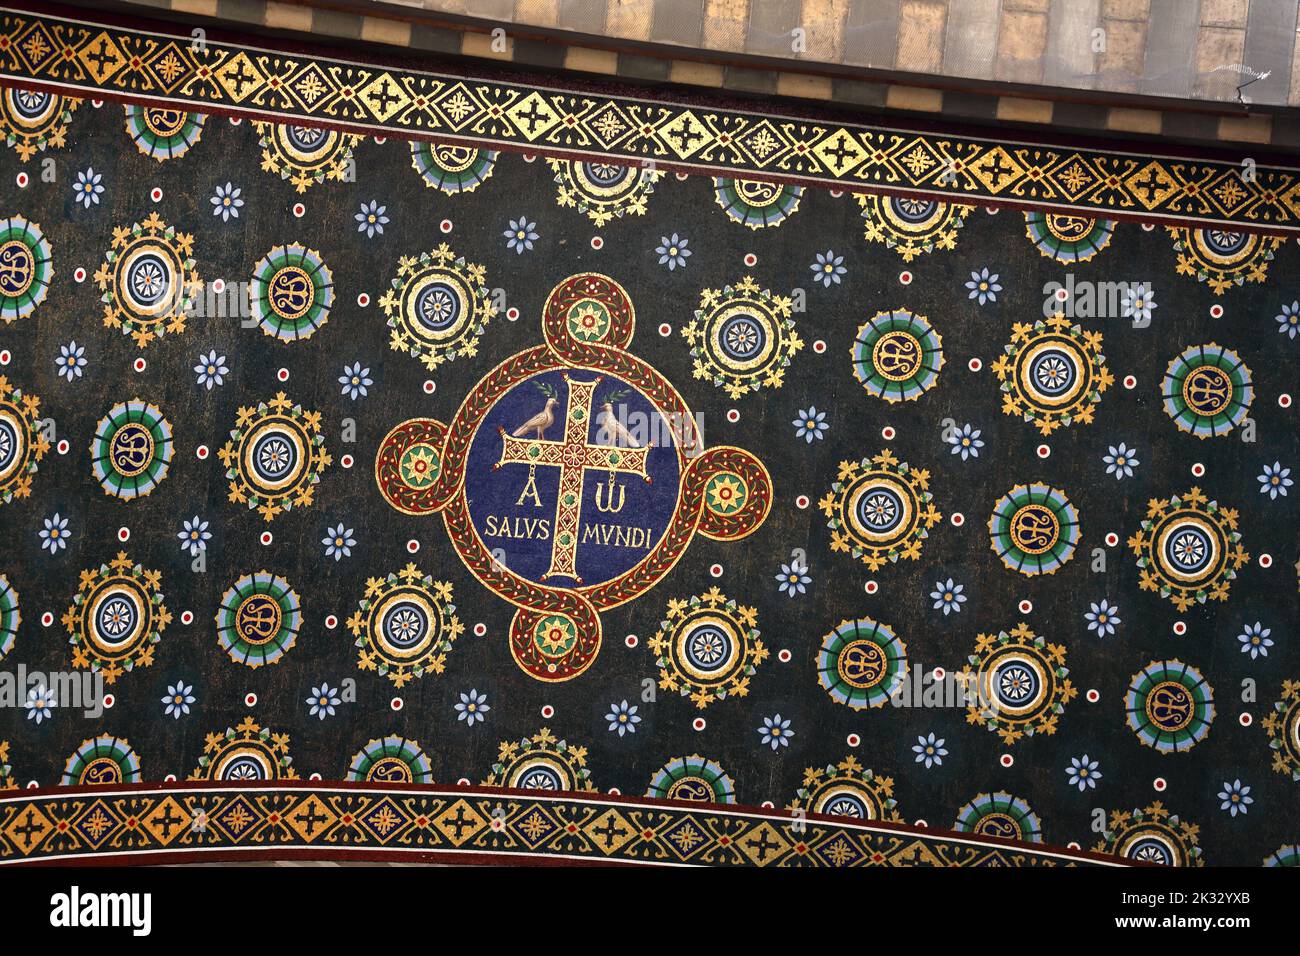 Kathedrale Sainte-Marie-Majeure (Kathedrale Santa Maria Maggiore) Detail des Kreuzes an der Decke des Bogengangs am Eingang Marseille Frankreich Stockfoto